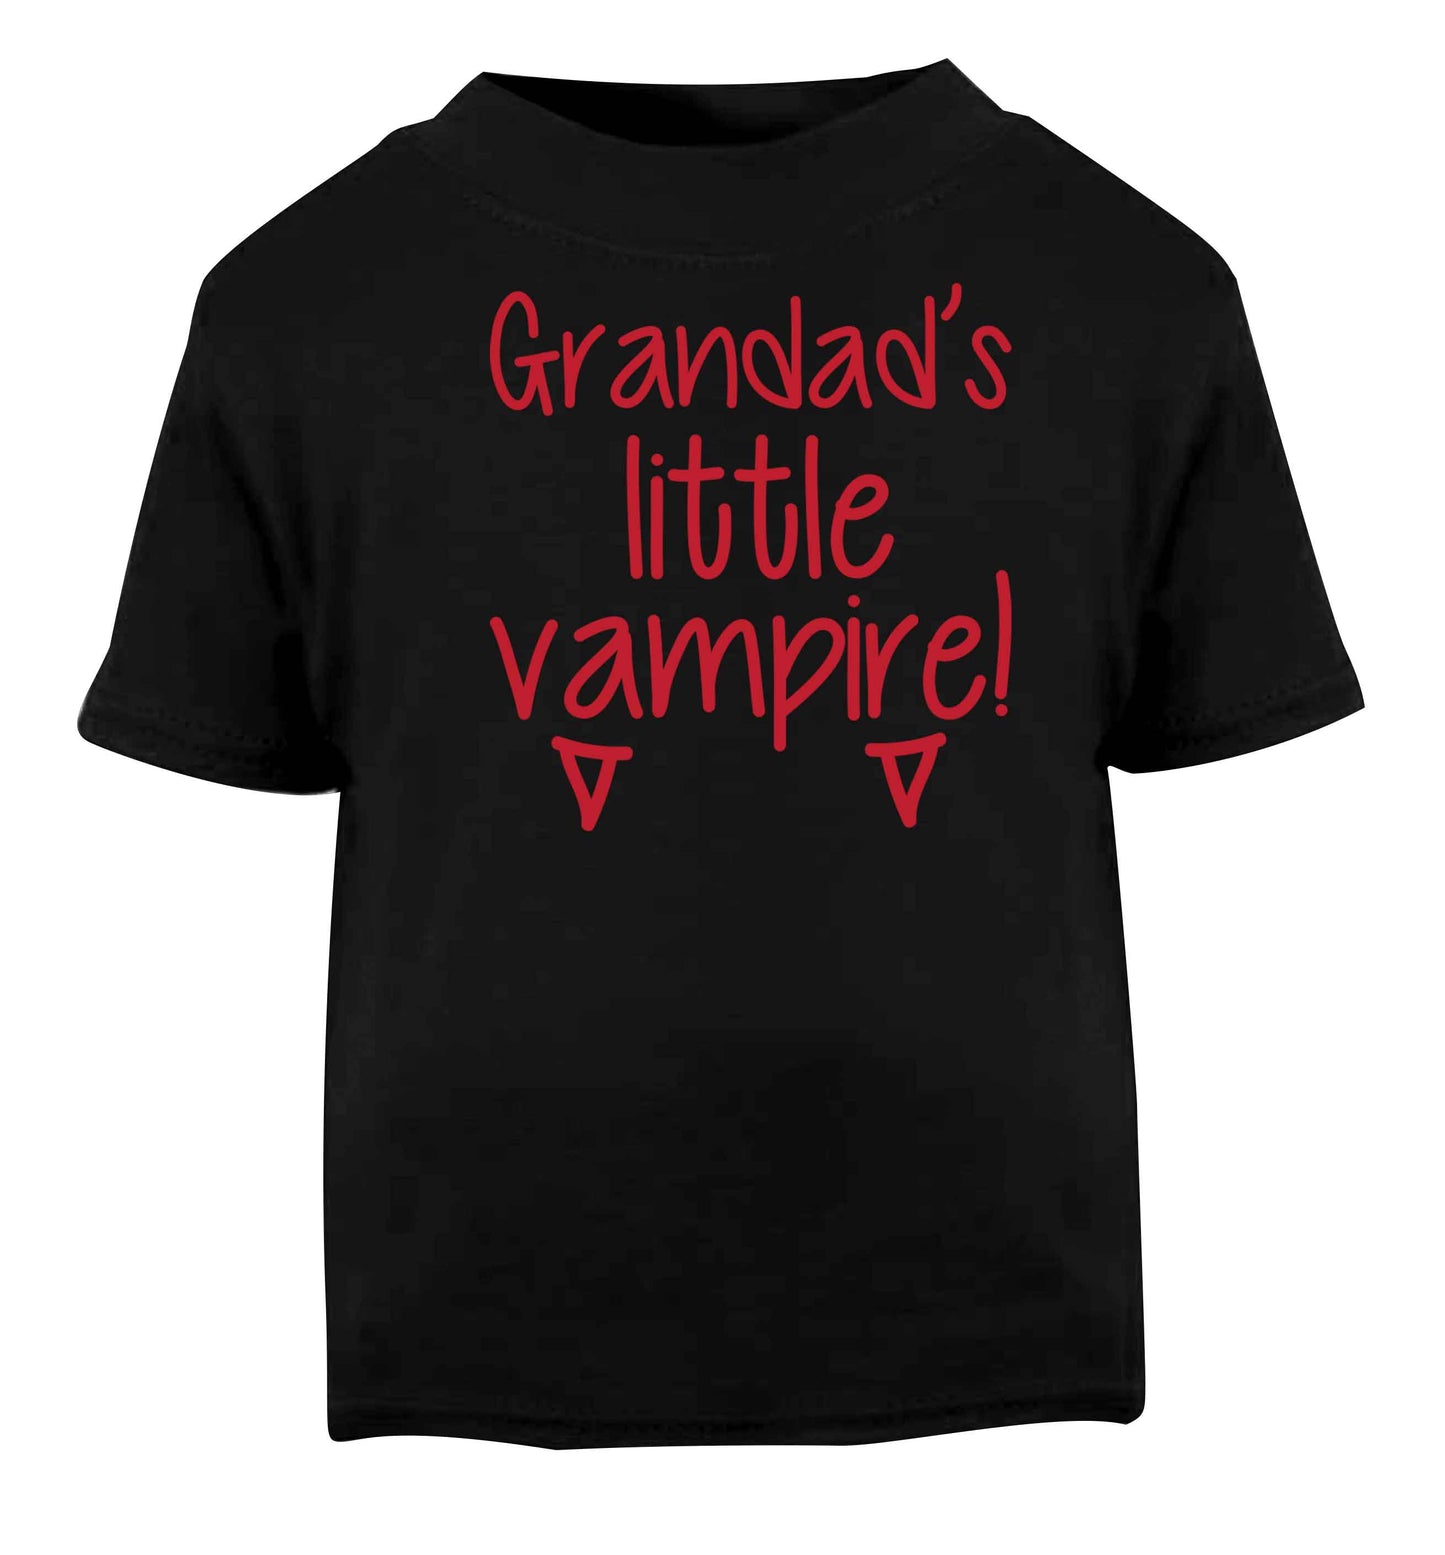 Grandad's little vampire Black baby toddler Tshirt 2 years